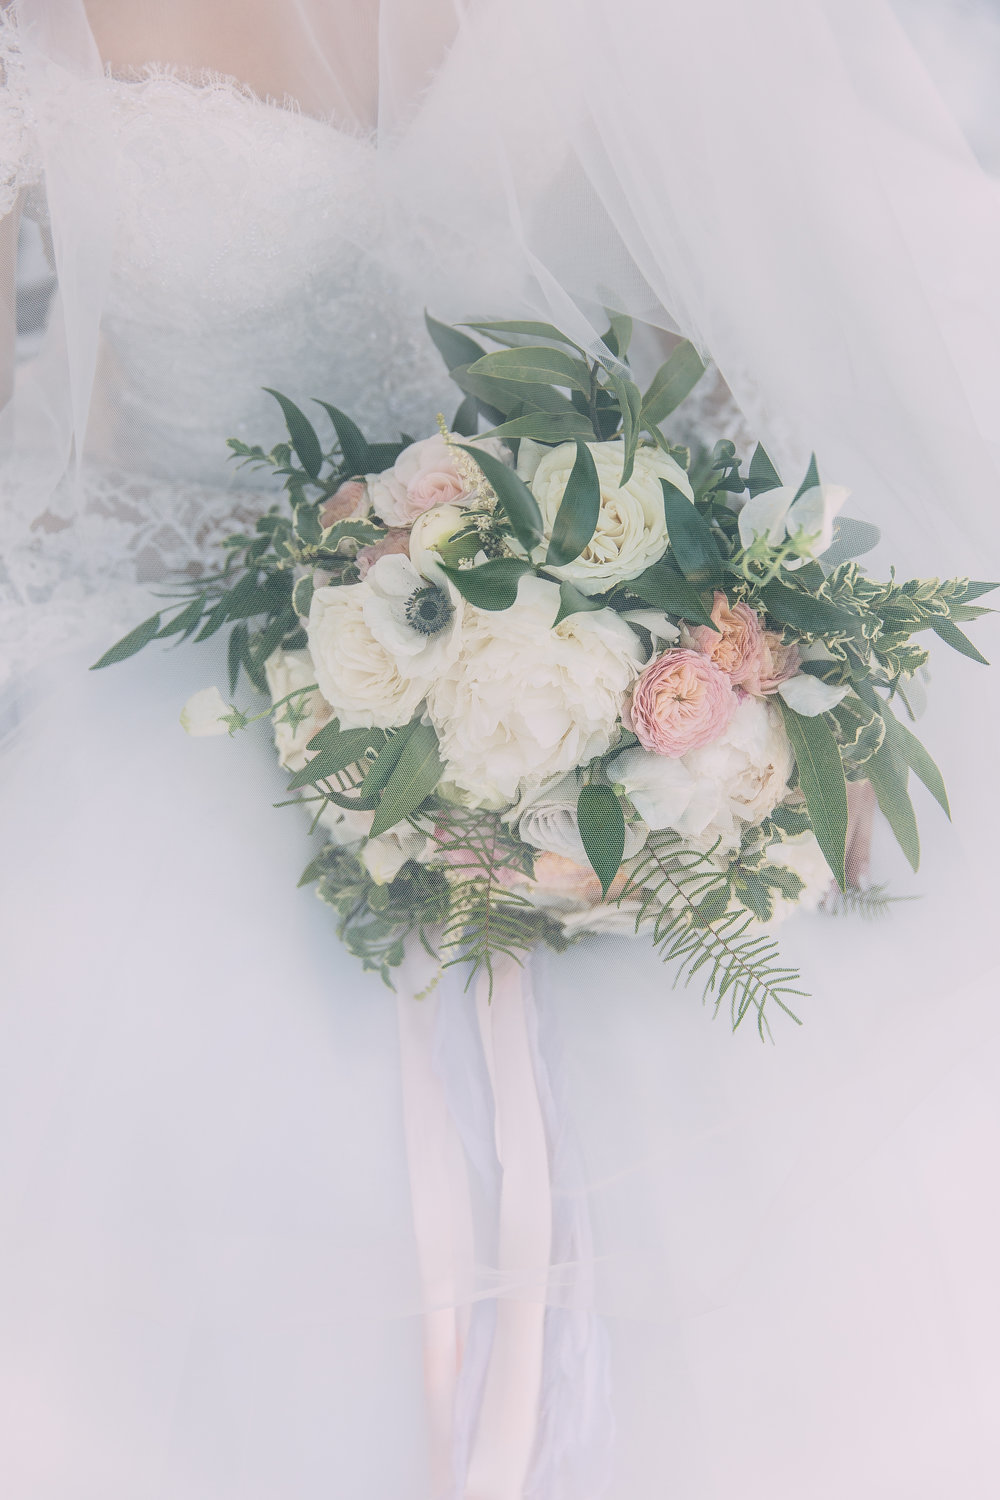 Violette-fleurs-anna-perevertaylo-White-Blush-elegant-flowers-for-wedding-decor-upscale-design-roseville-sacramento-california-rancho-robles-vinyards-lincoln-elegant-luxury-blush-bridal-bouquet-veil-photo.jpg